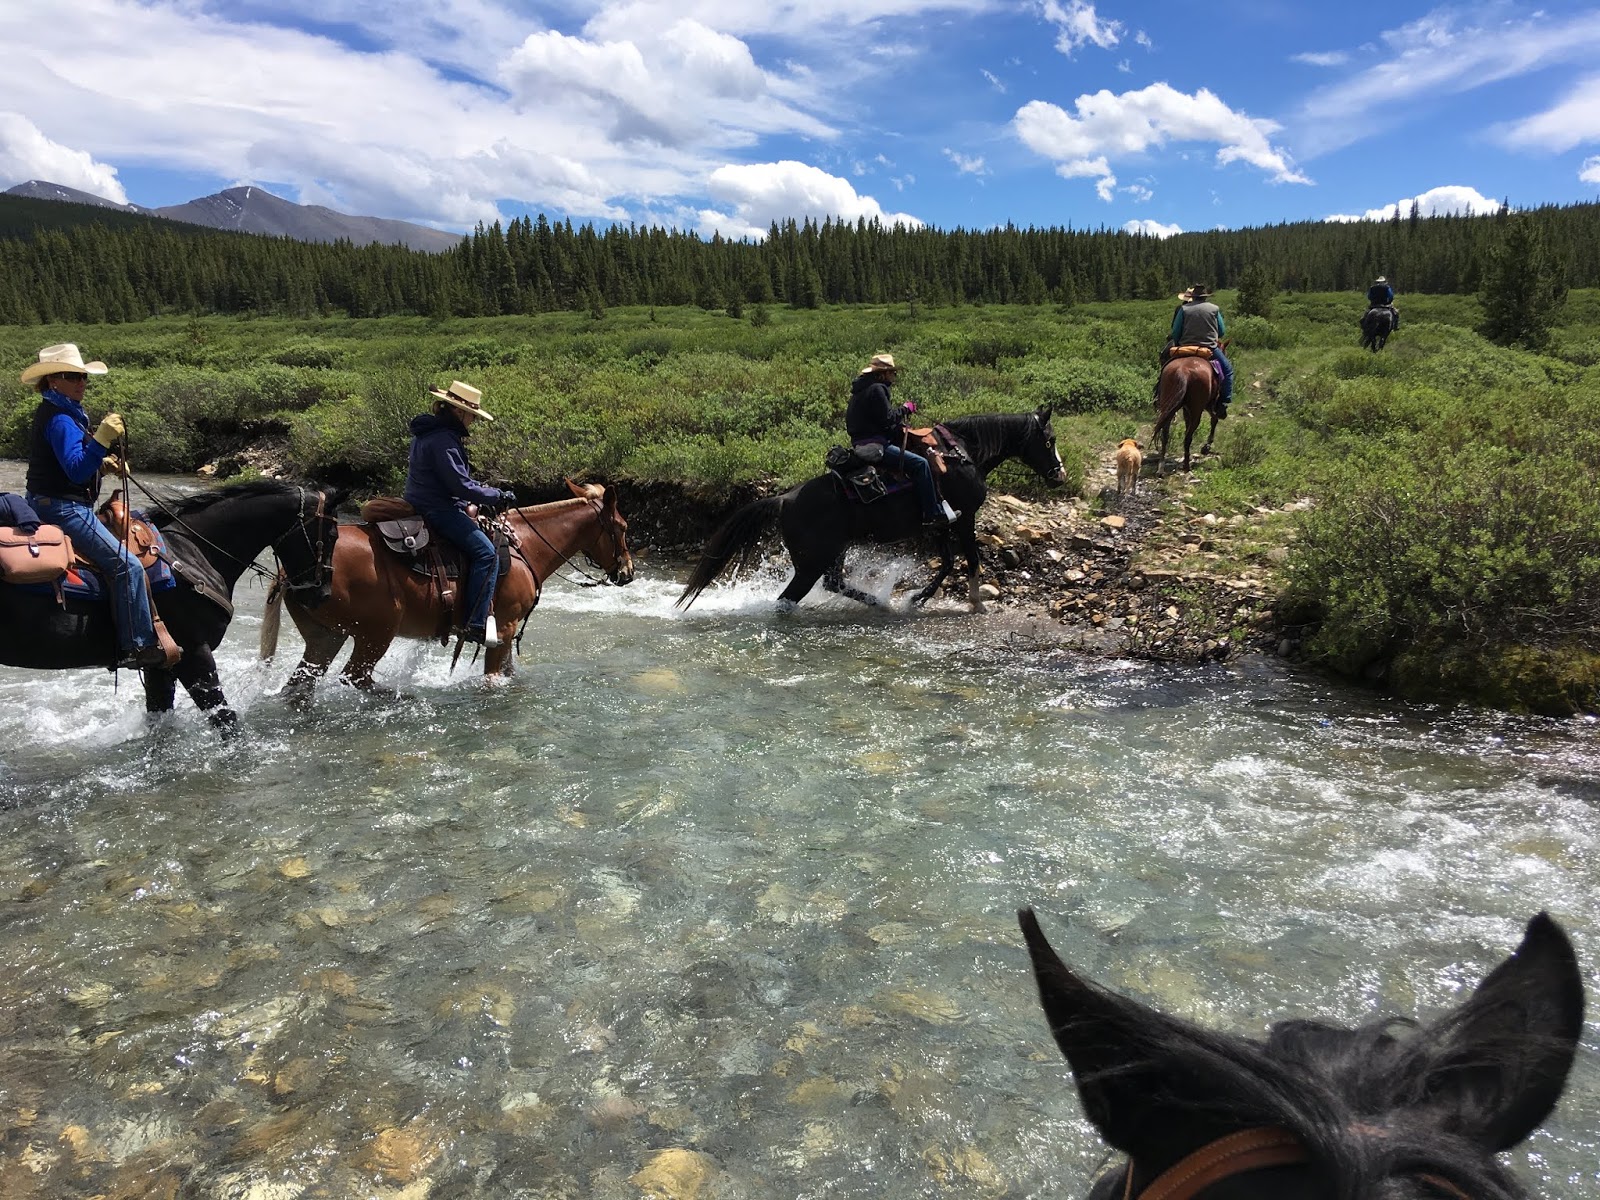 Camping and Horses